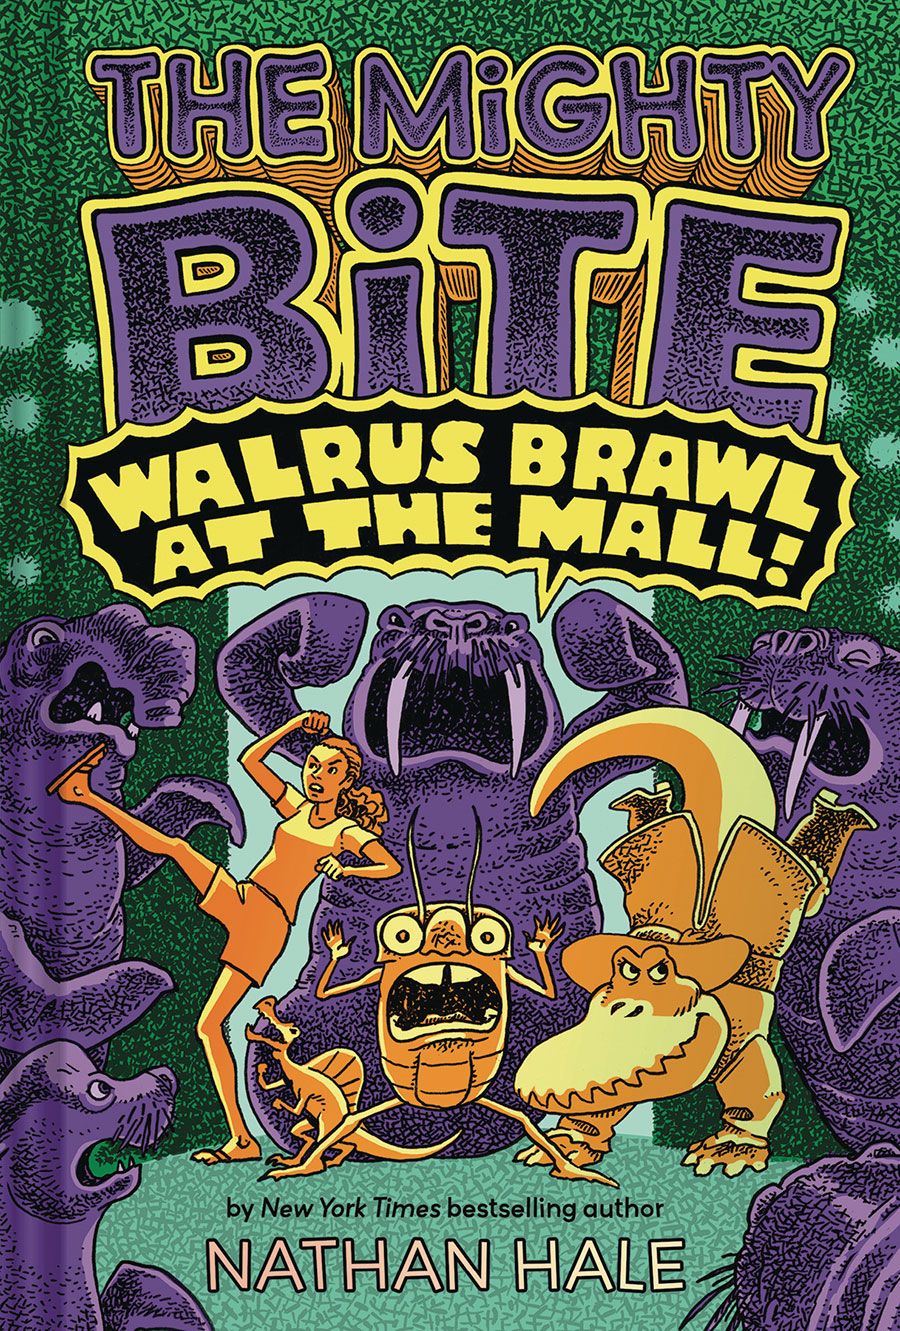 Mighty Bite Vol 2 Walrus Brawl At The Mall HC